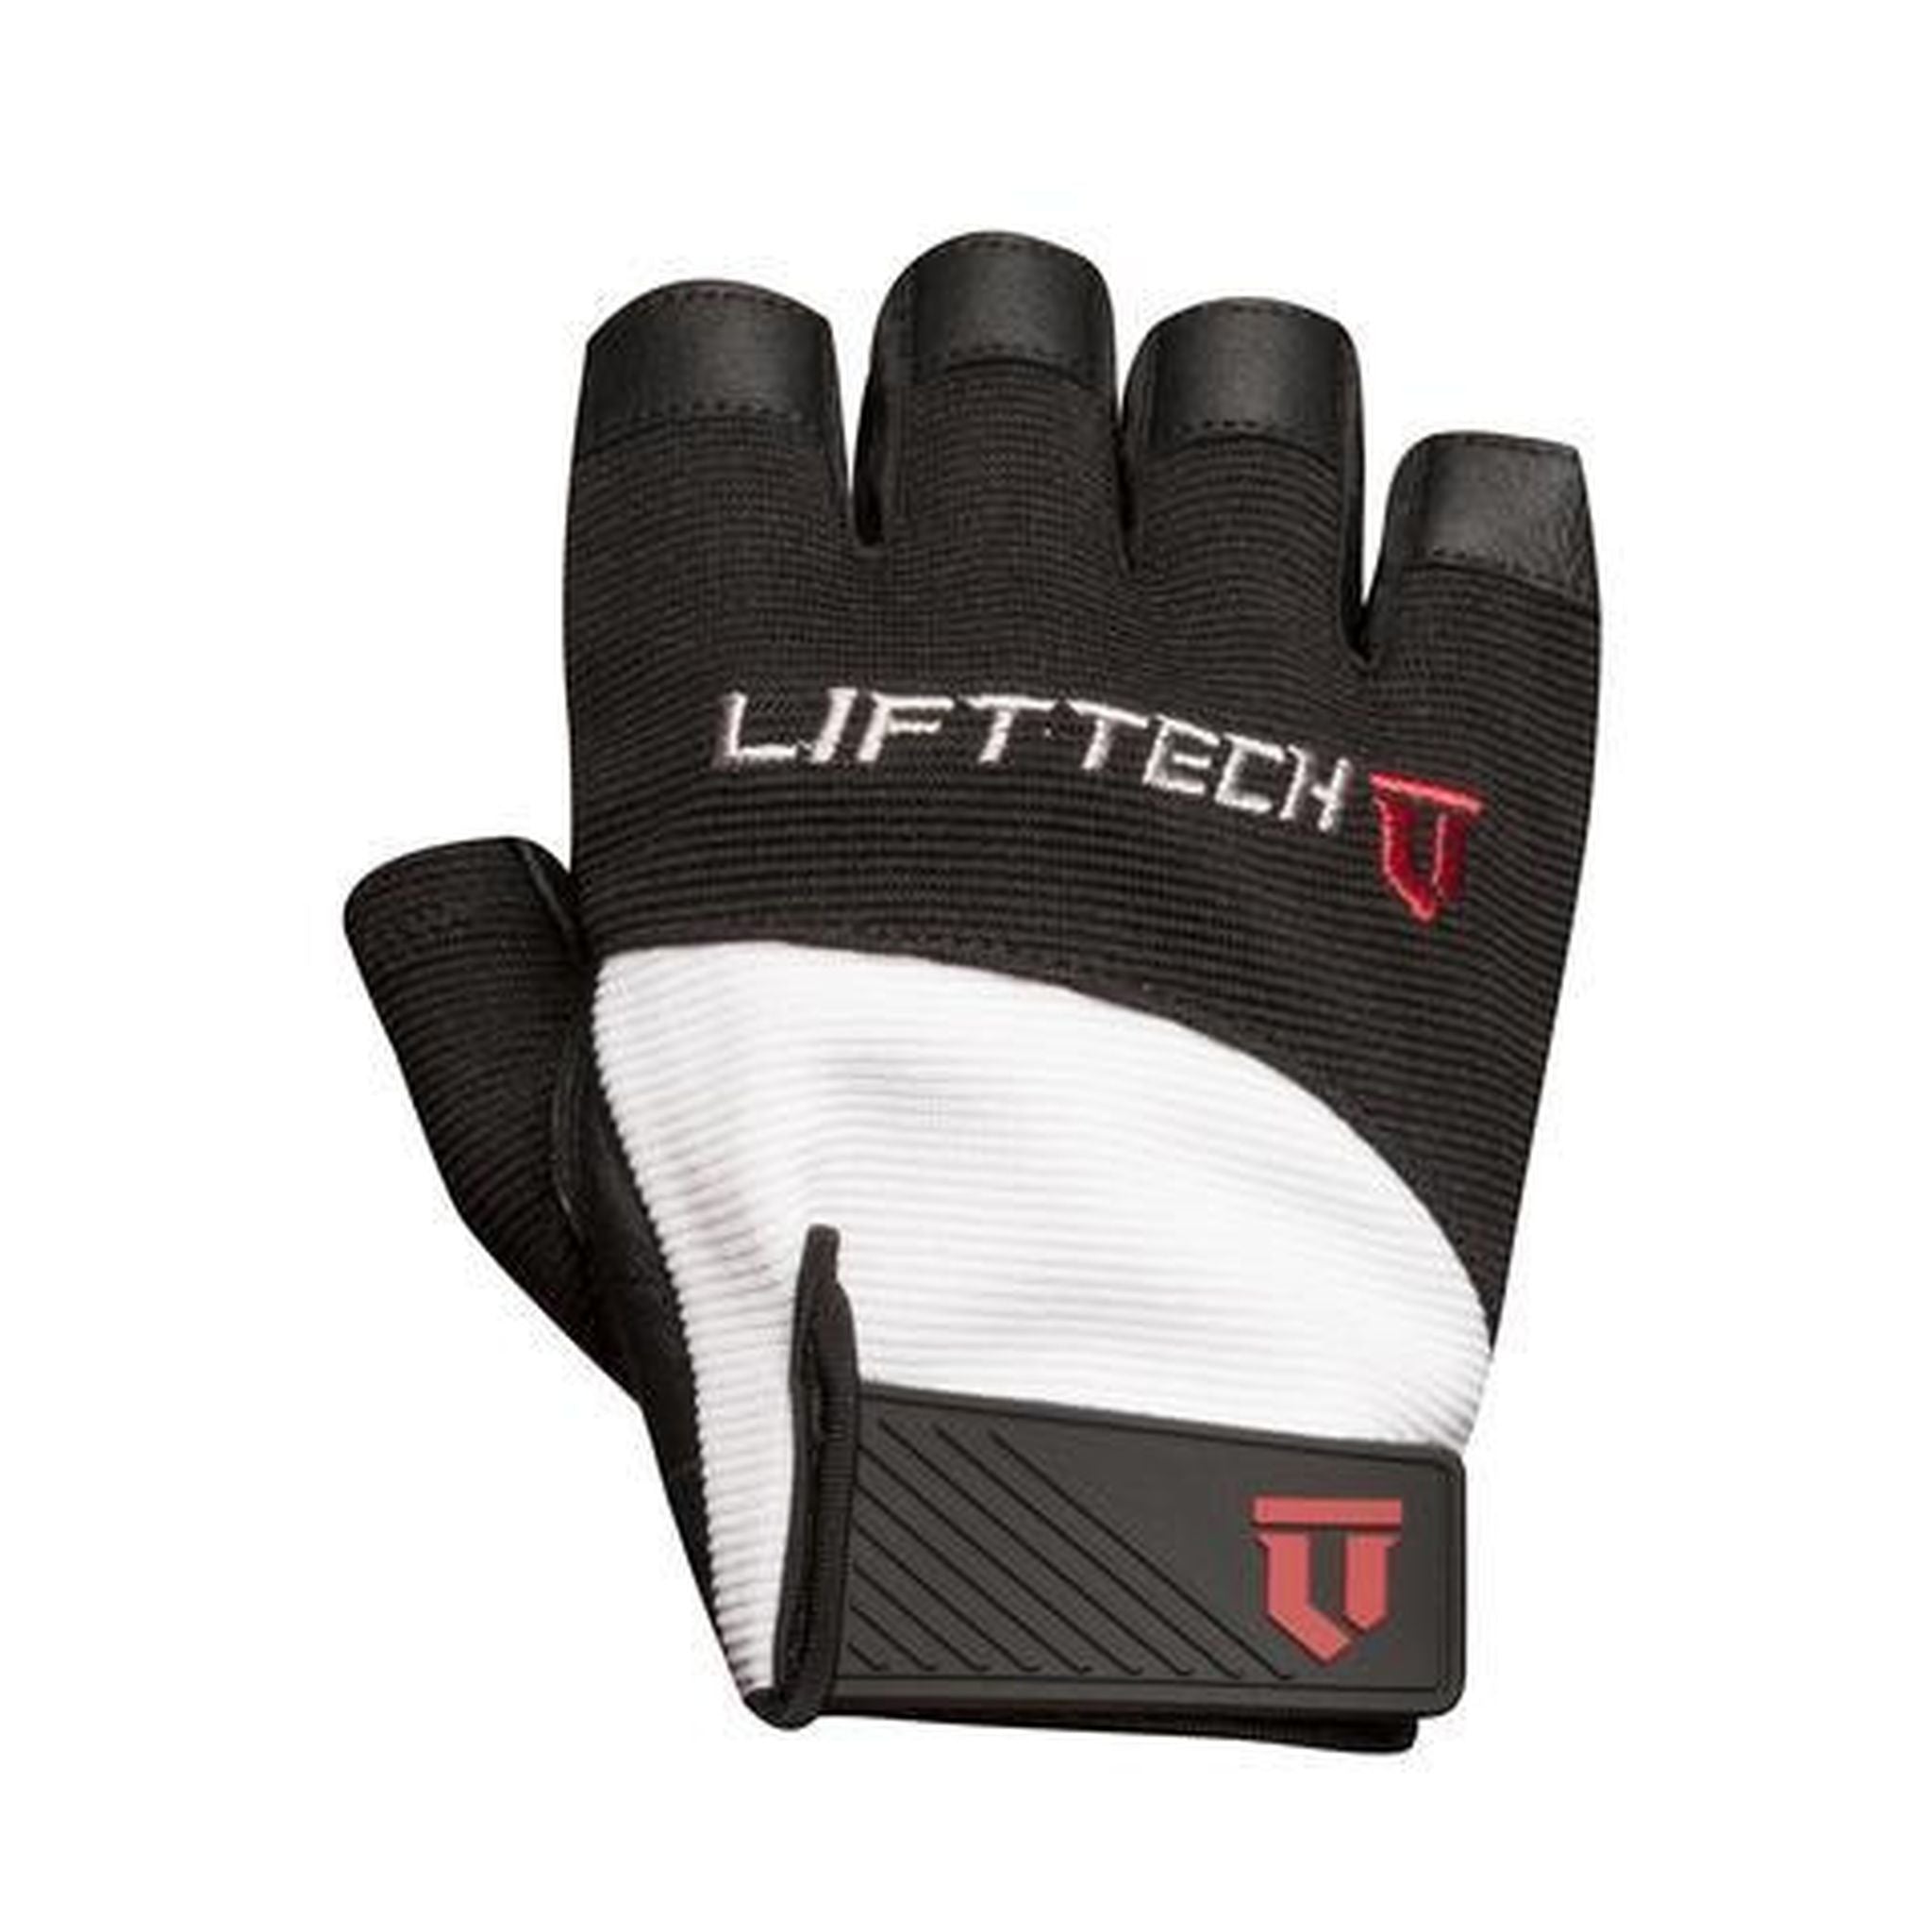 LIFT TECH Elite Weight Training Gloves